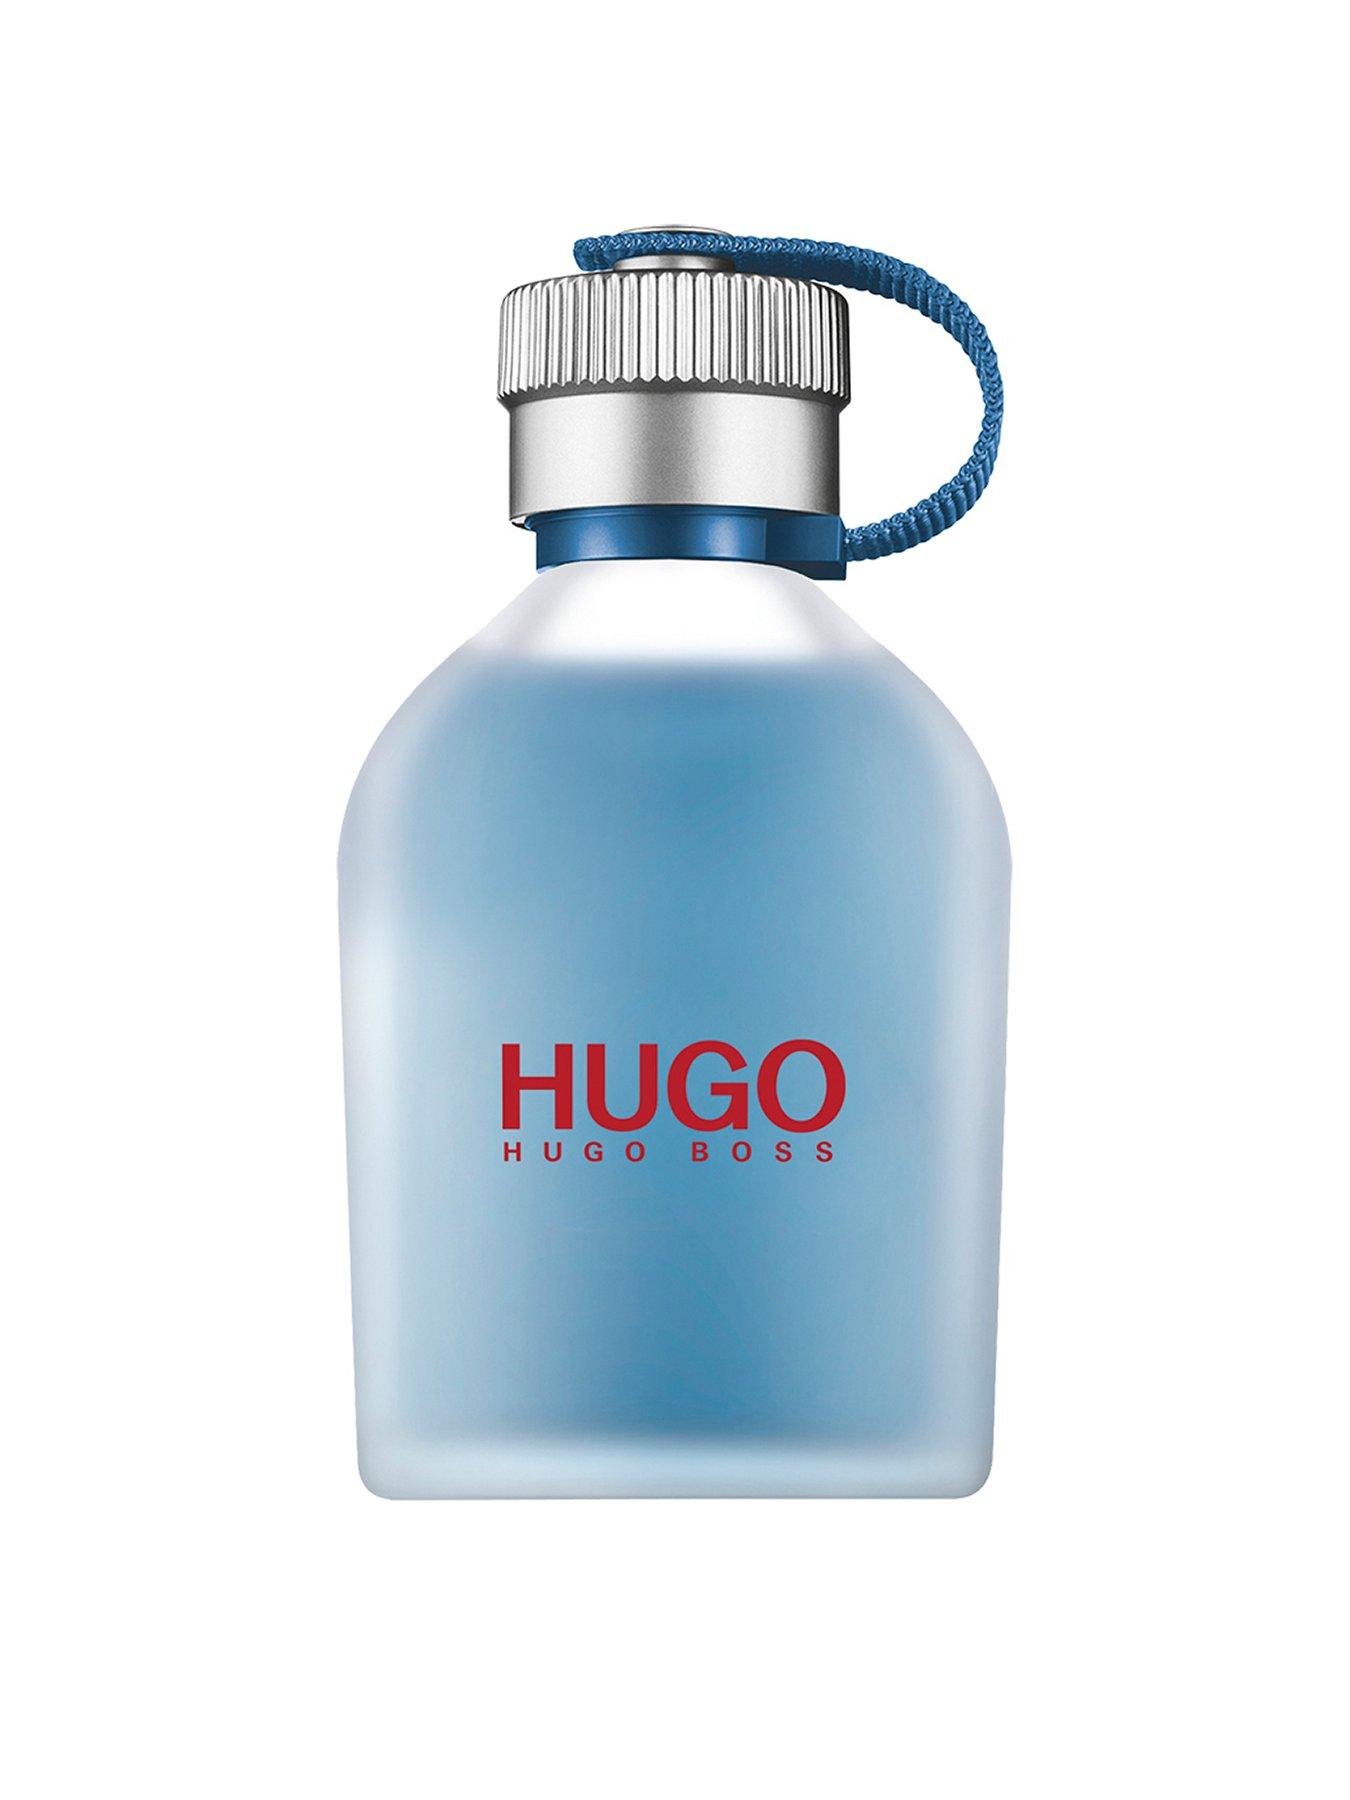 hugo boss reversed liverpool